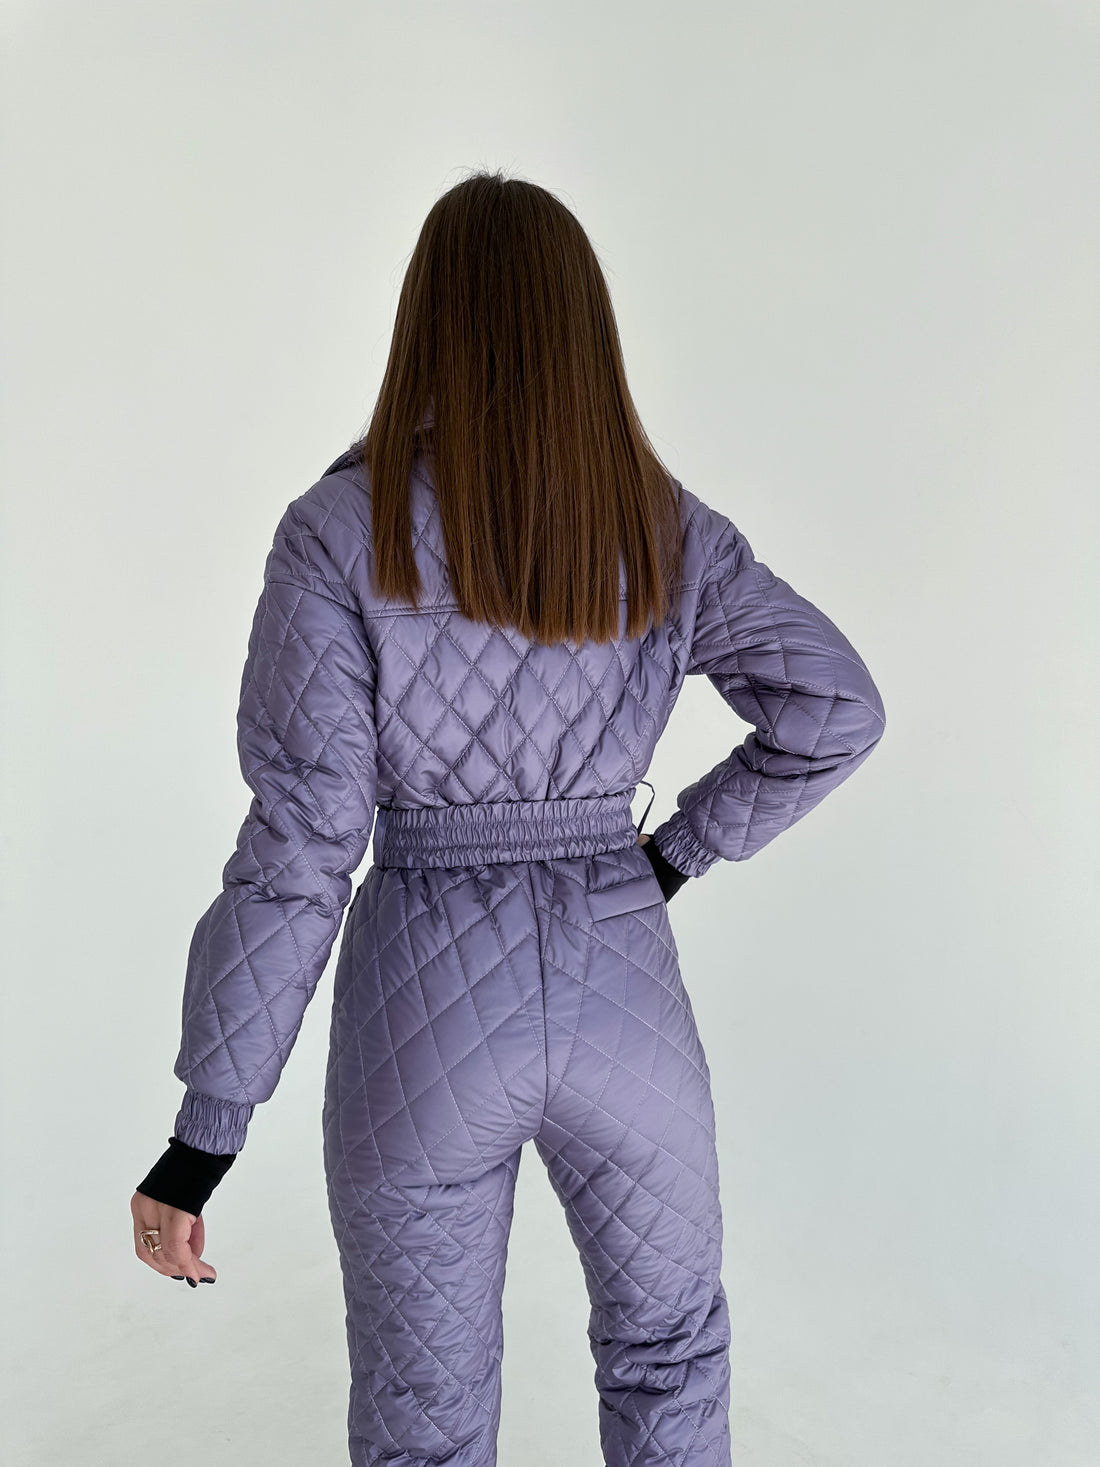 Ski suit overall female violet LUCANIA - PURPLE Ski fashion look old money